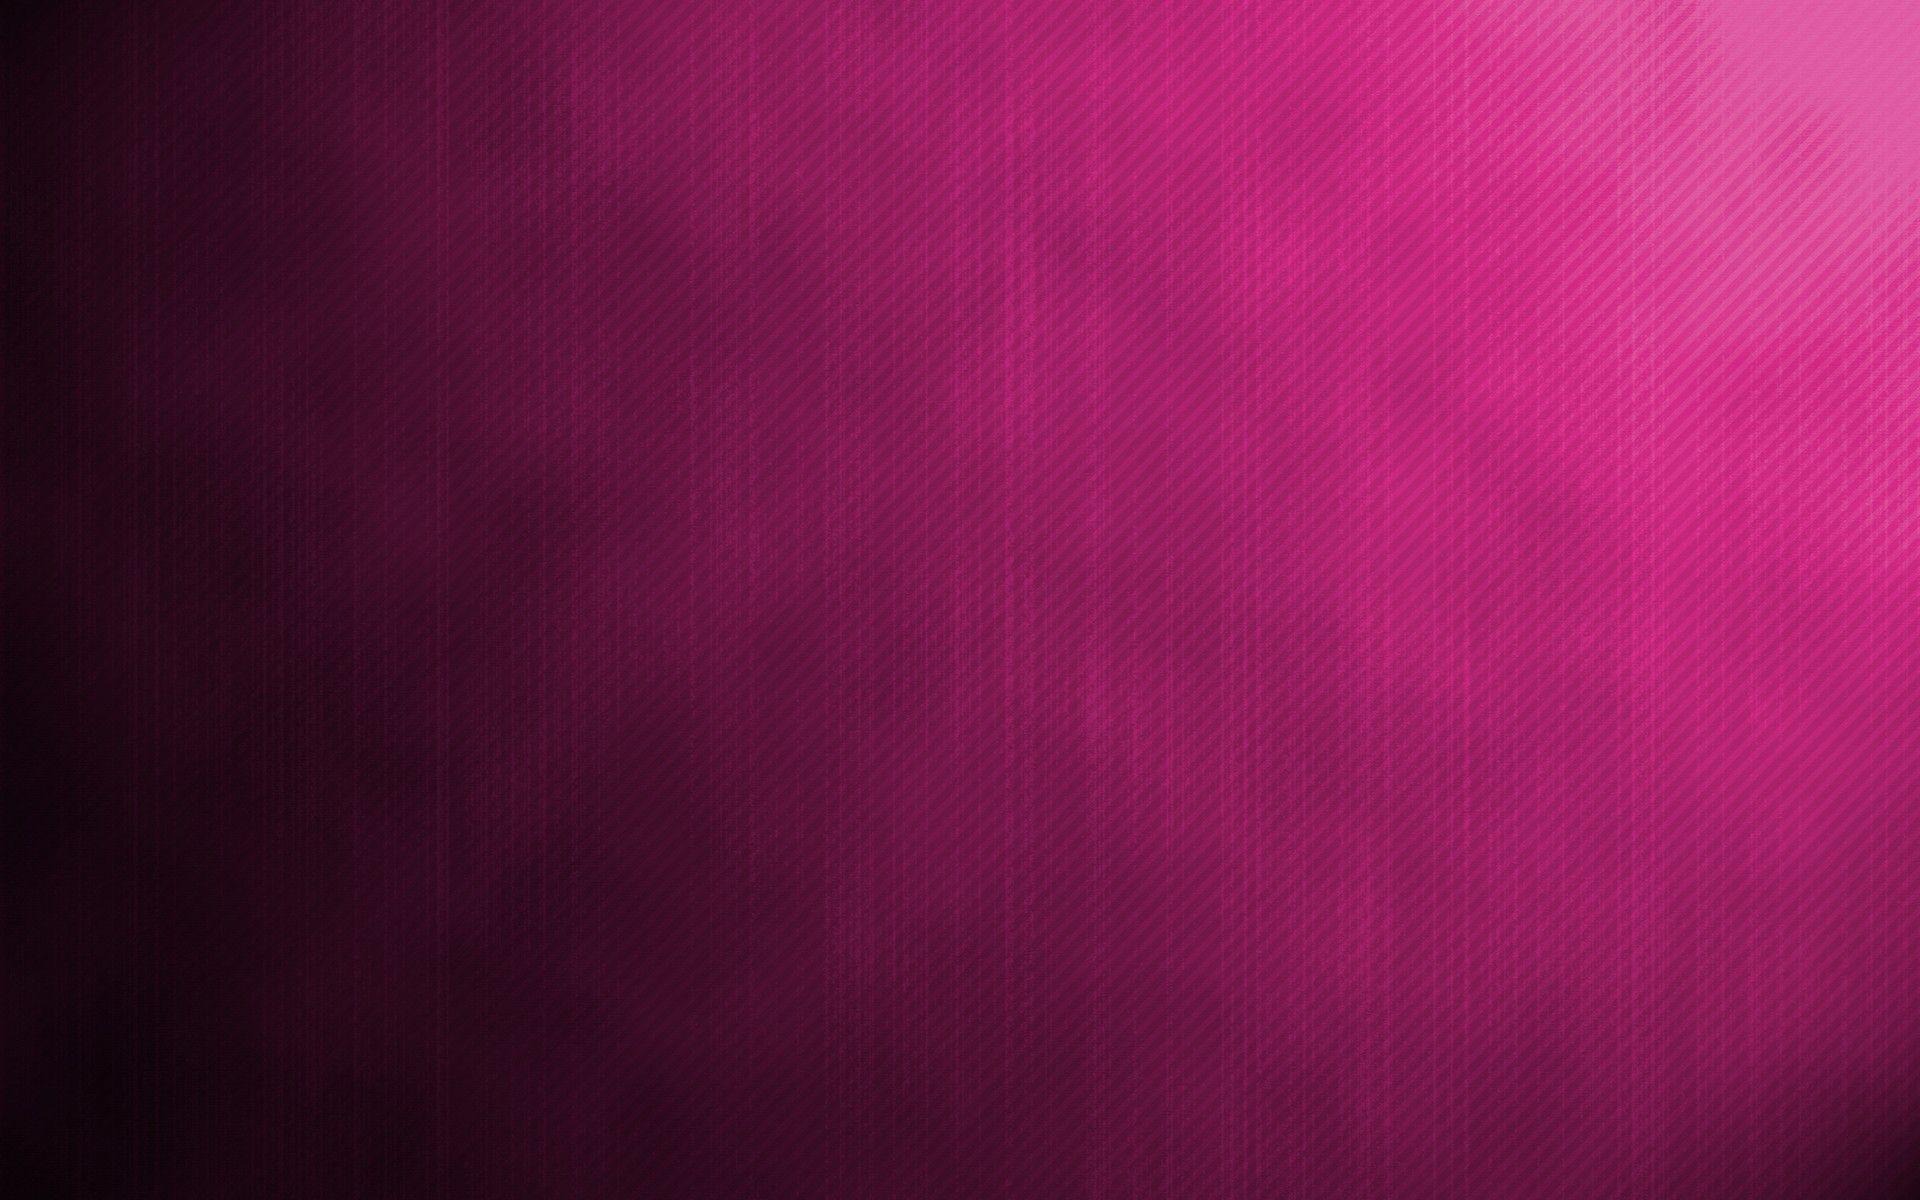 Wallpaper.wiki Pink Gradient Texture Wallpaper Hd PIC WPB0010633